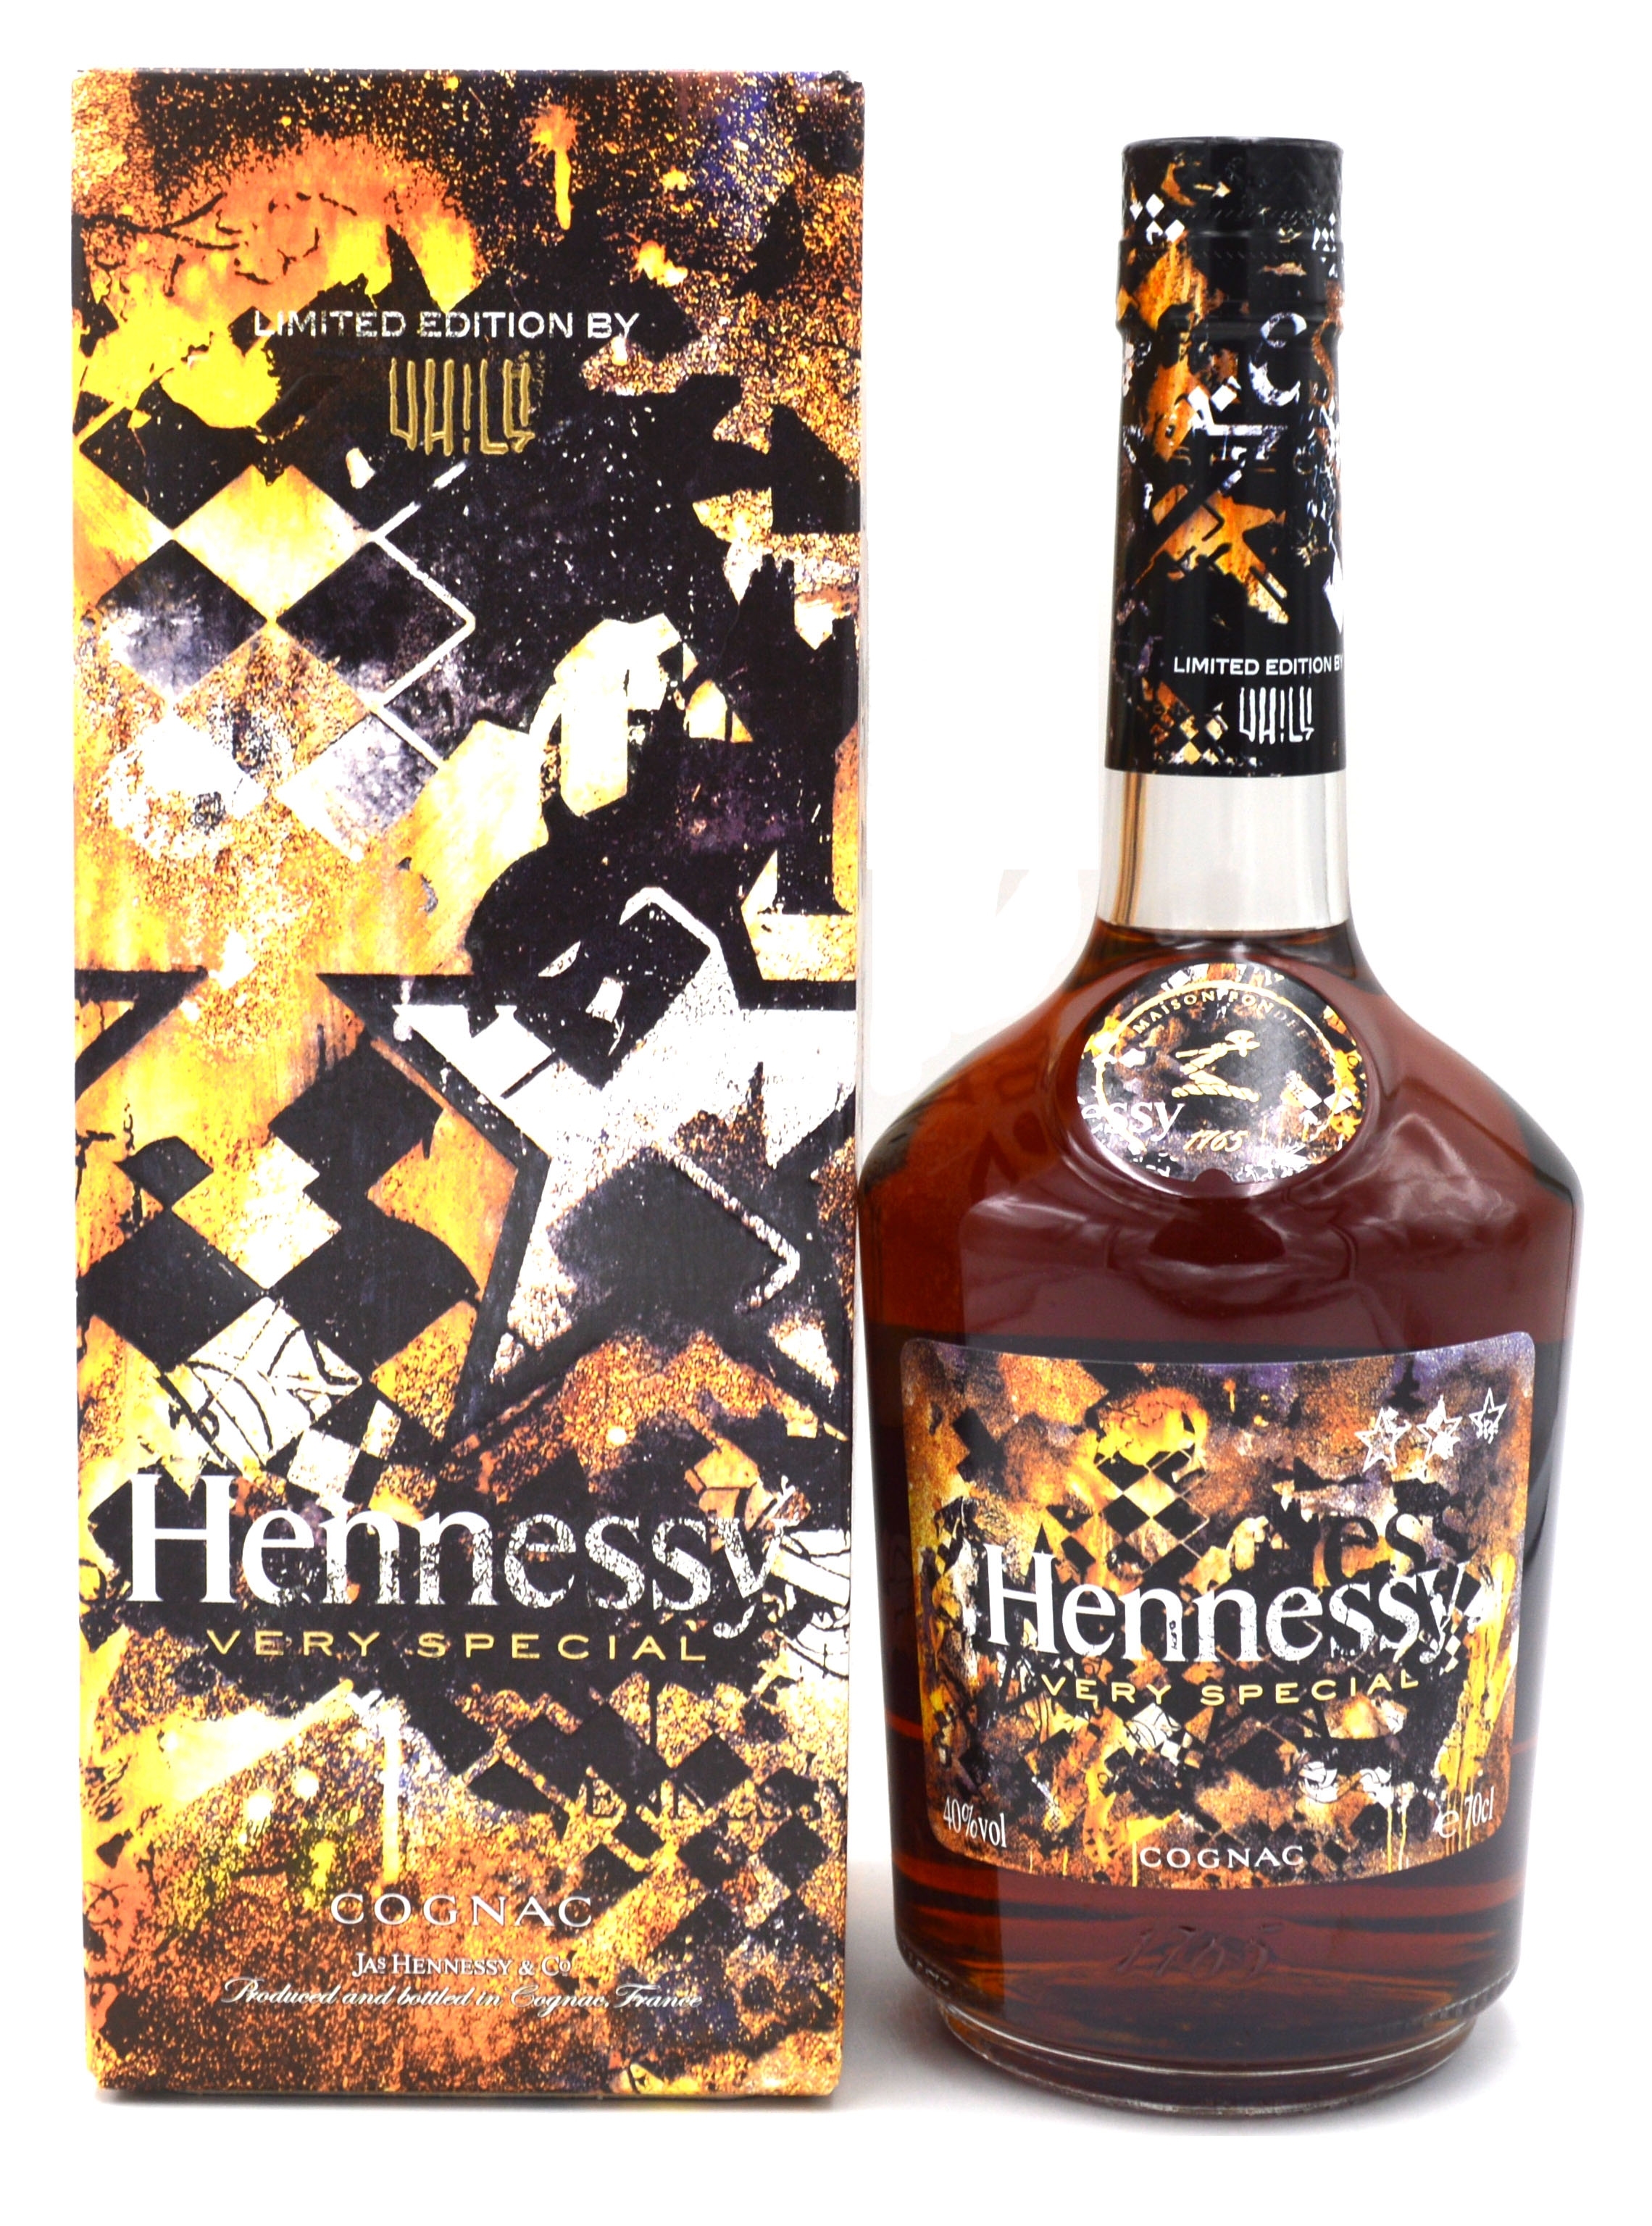 Hennessy VS 0.7L (40% Vol.)